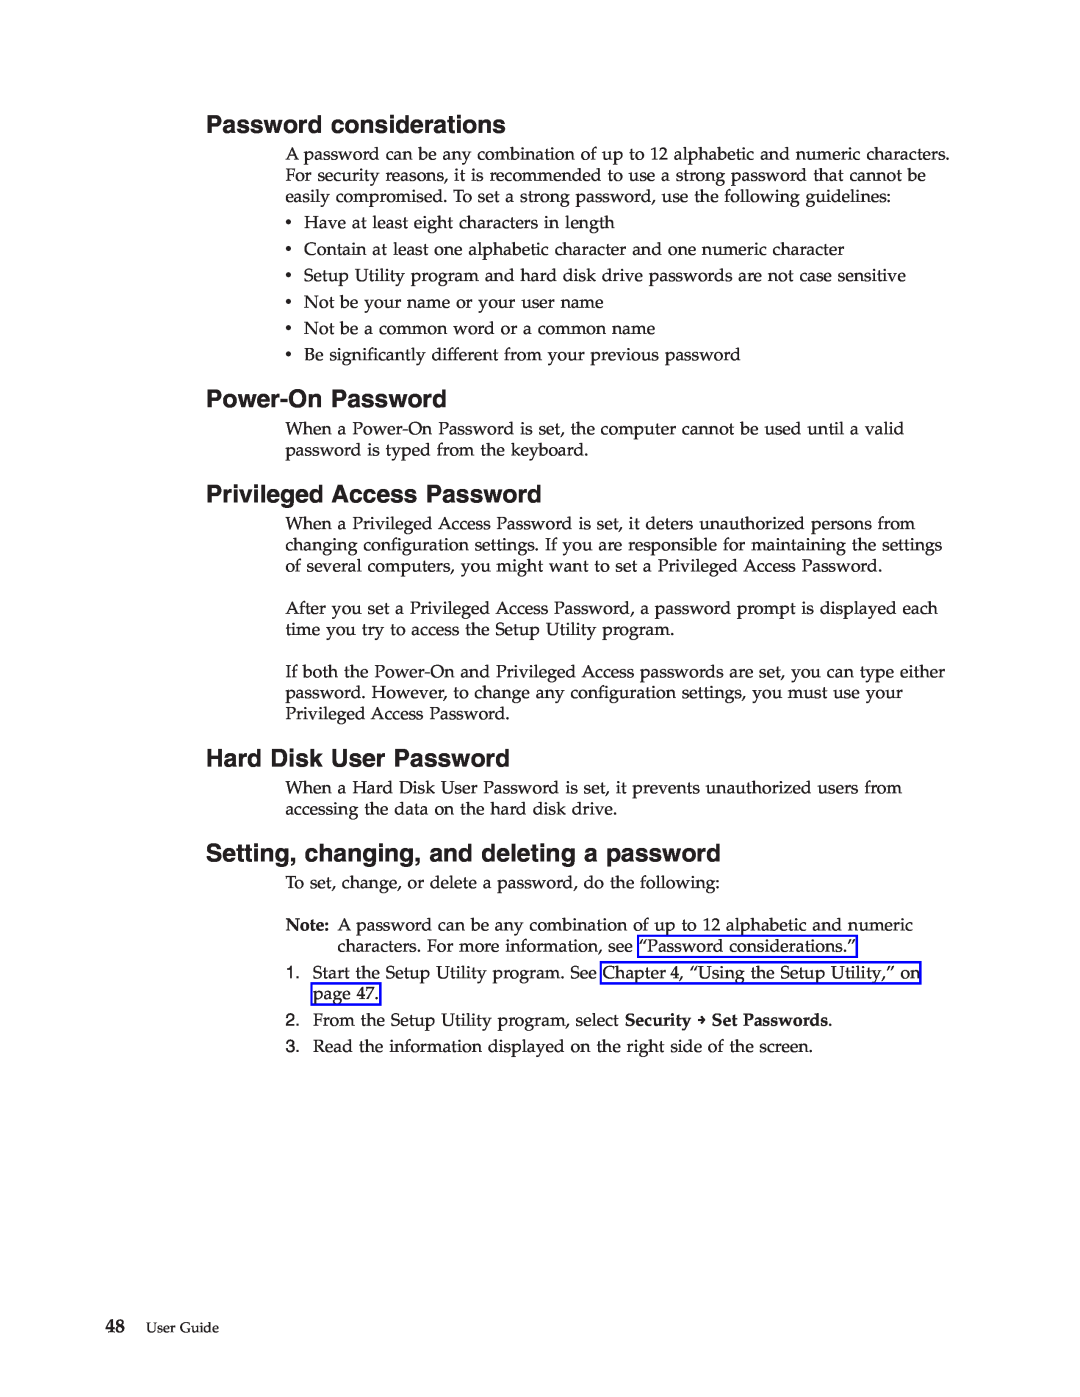 Lenovo 3379, 9964, 6137, 7638 Password considerations, Power-OnPassword, Privileged Access Password, Hard Disk User Password 